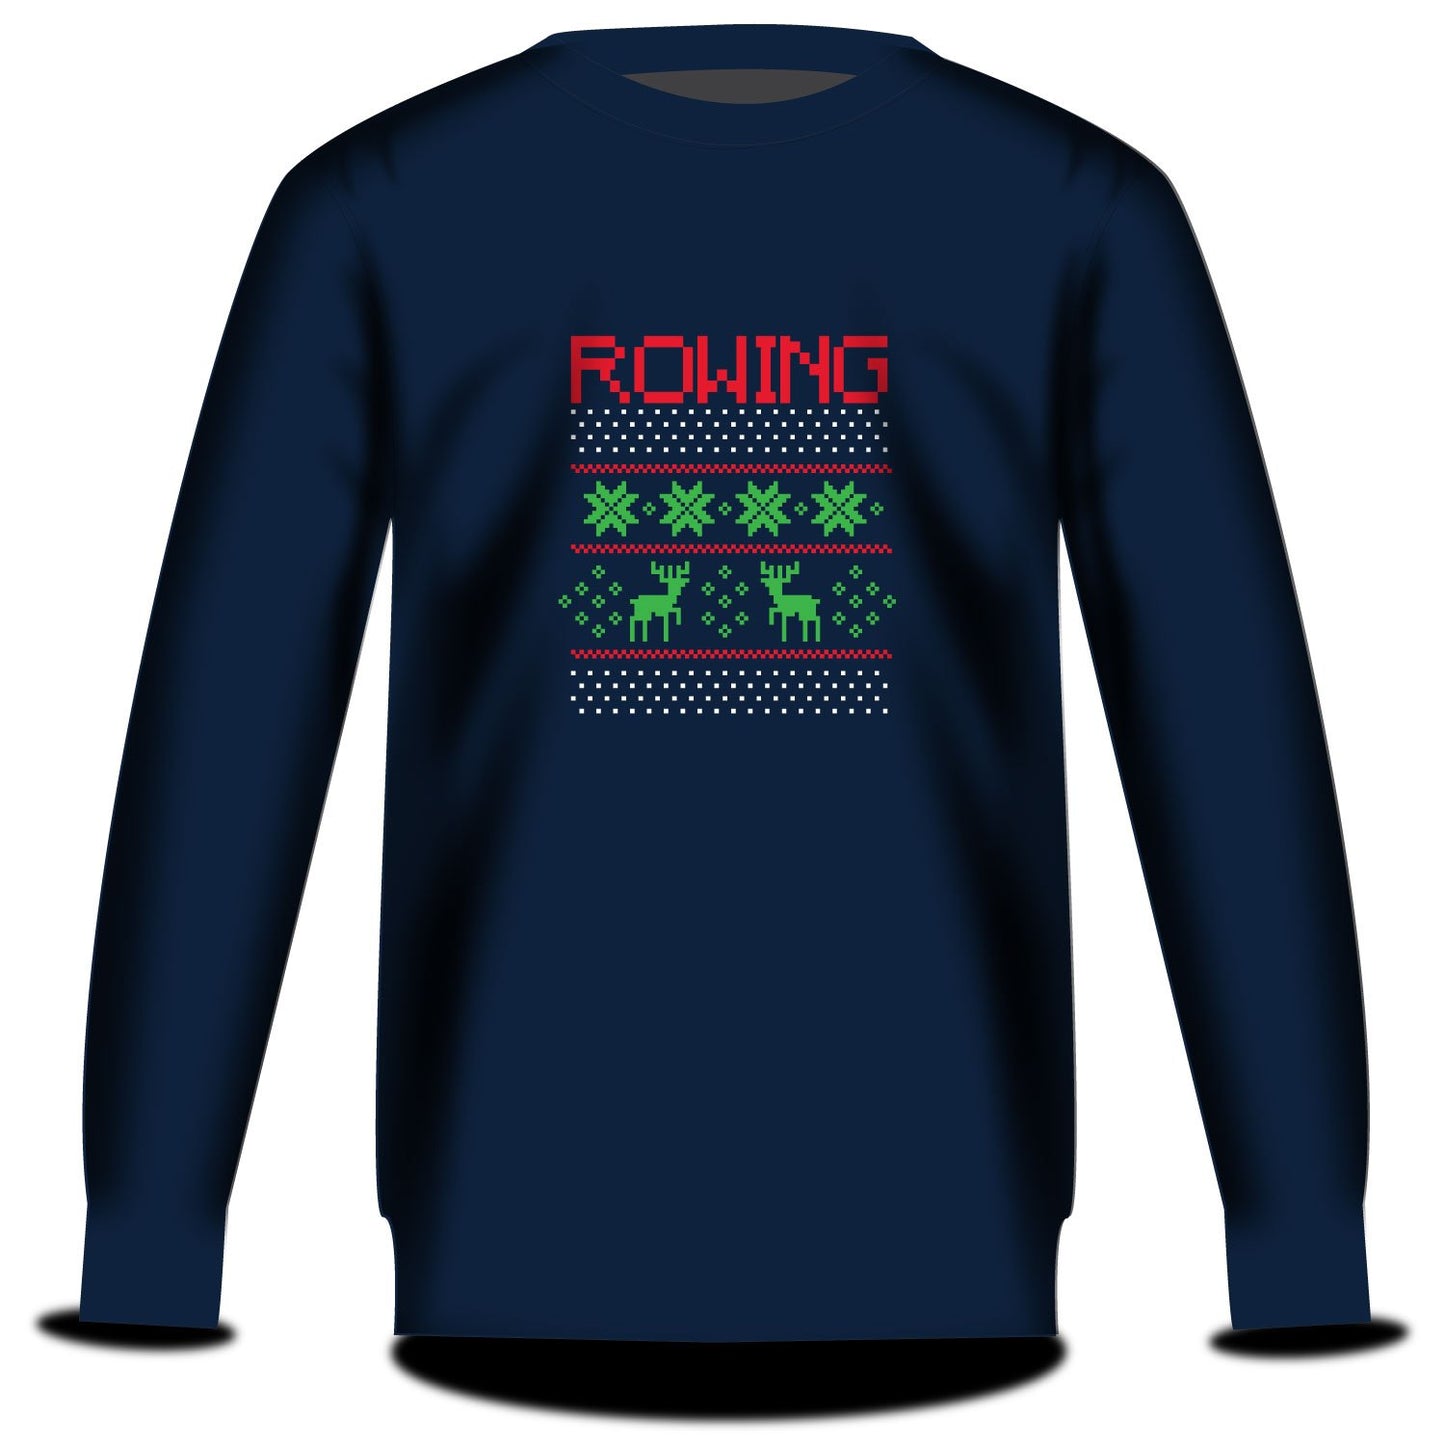 Stitch Rowing Xmas Jumper Sweatshirt